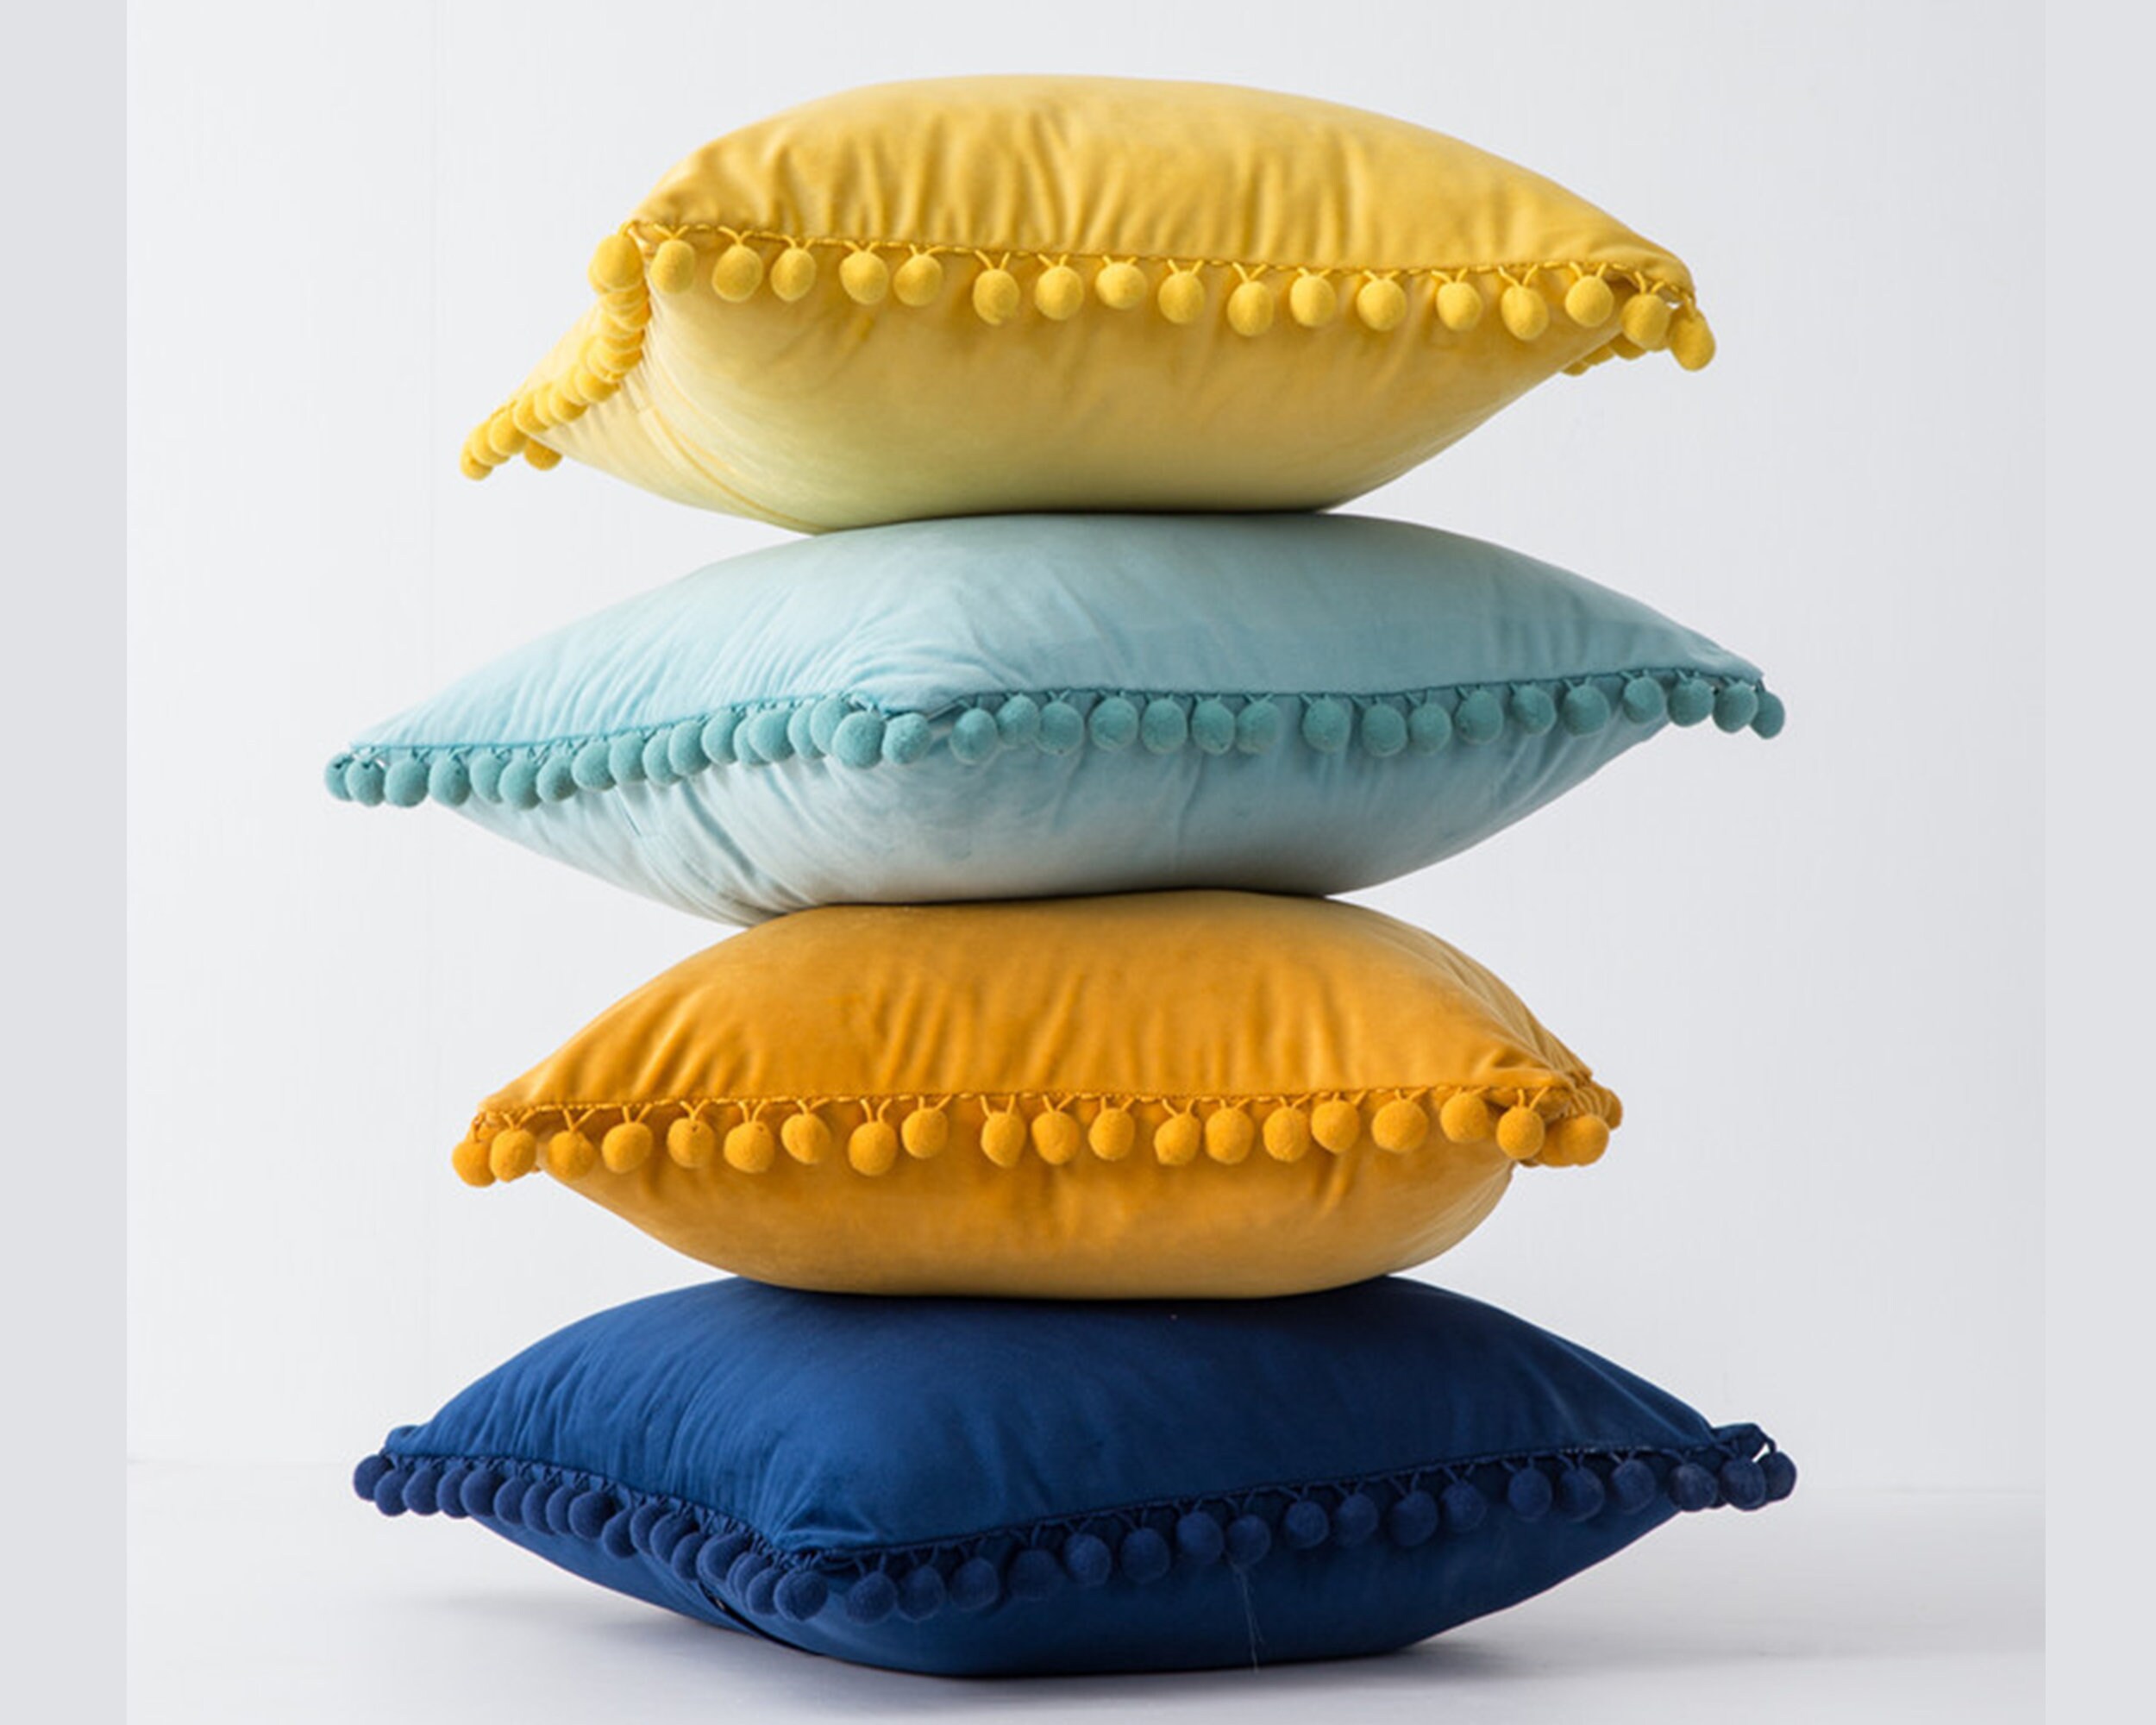 Velvet Cushion cover 18x18 pom pom pillow cover, decorative pillows,co – La  Moderno